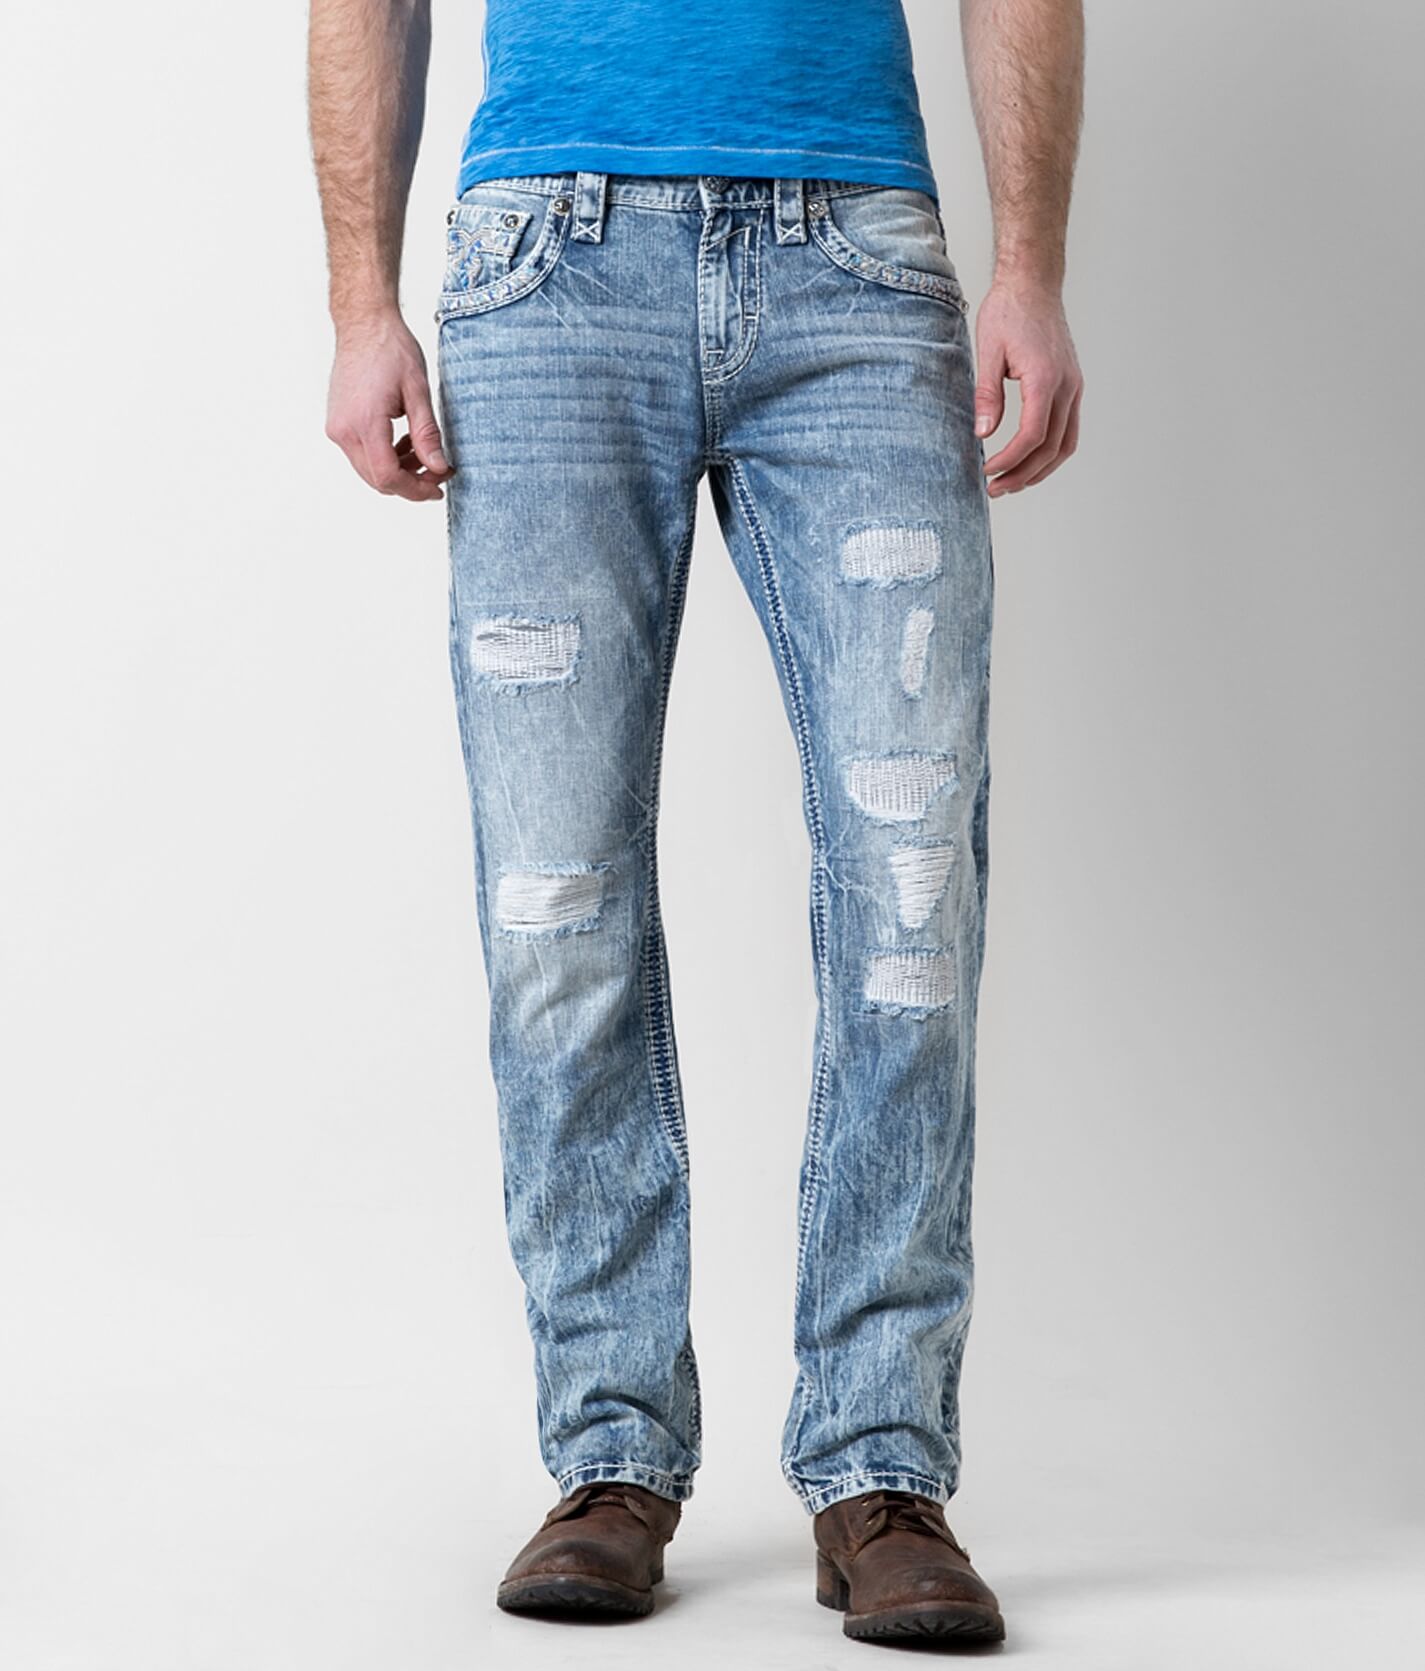 mens jeans similar to rock revival